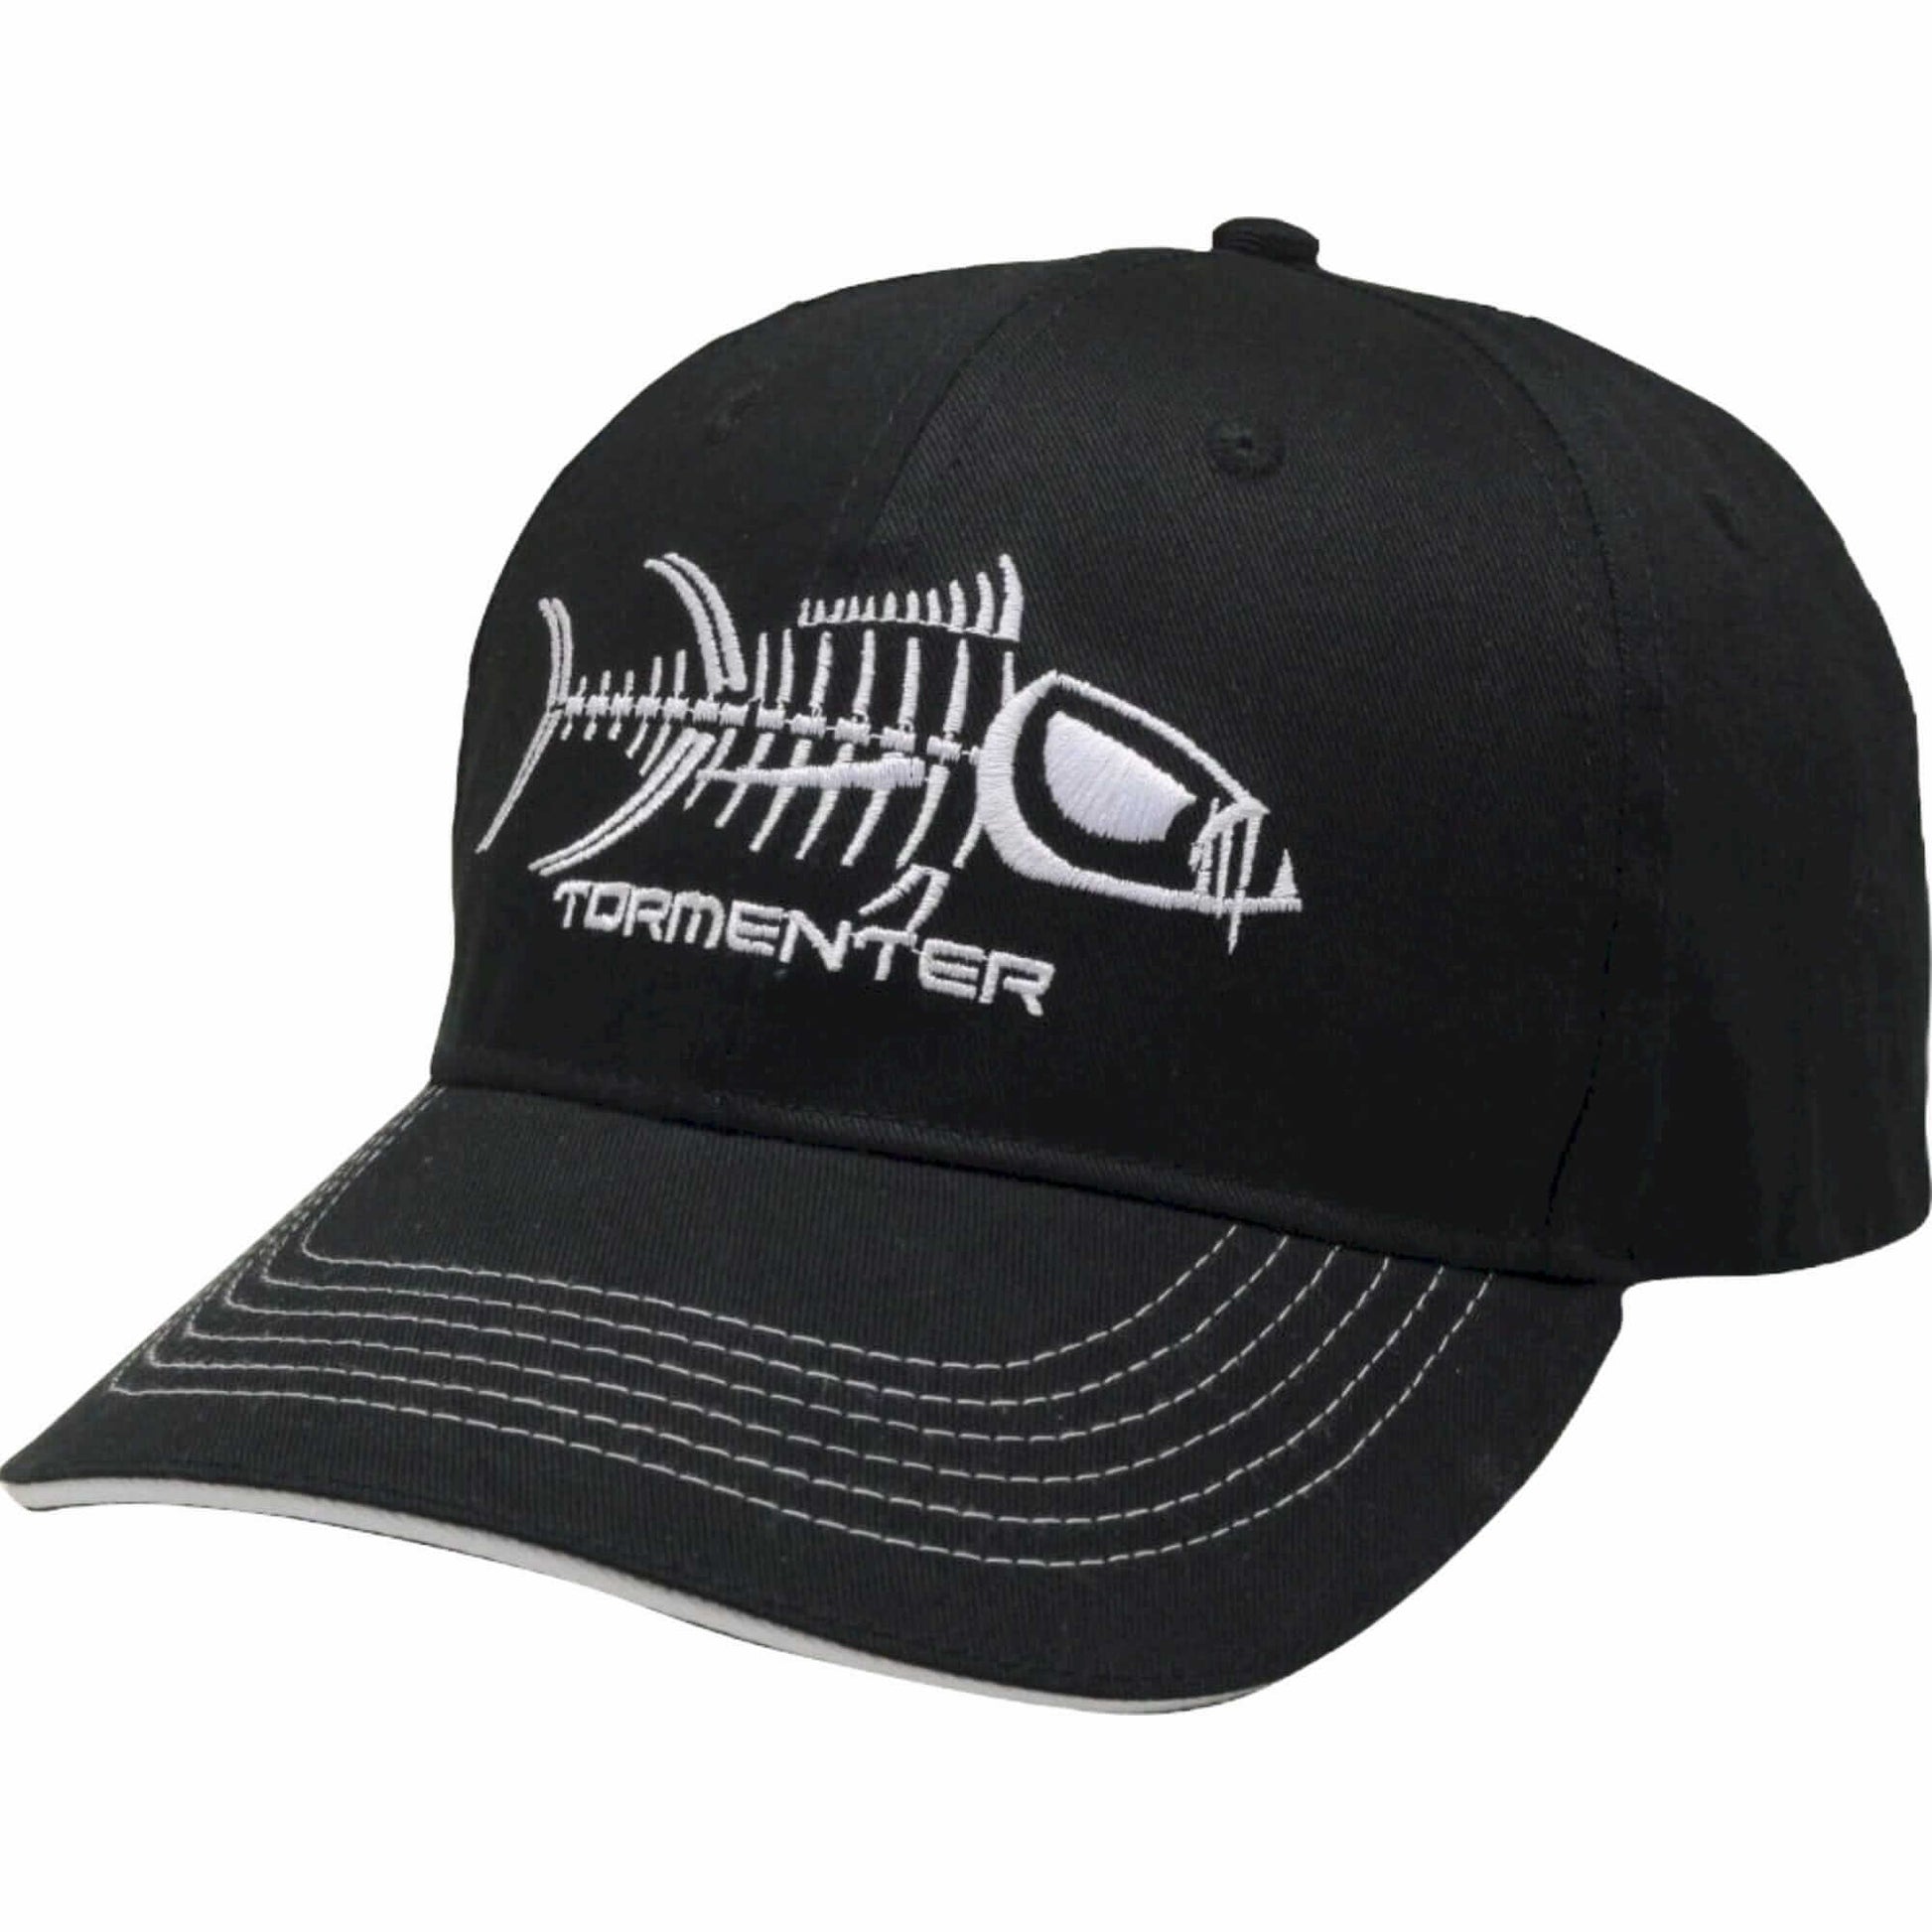 Black & White Fishing Hat Head Gear Tormenter Ocean 